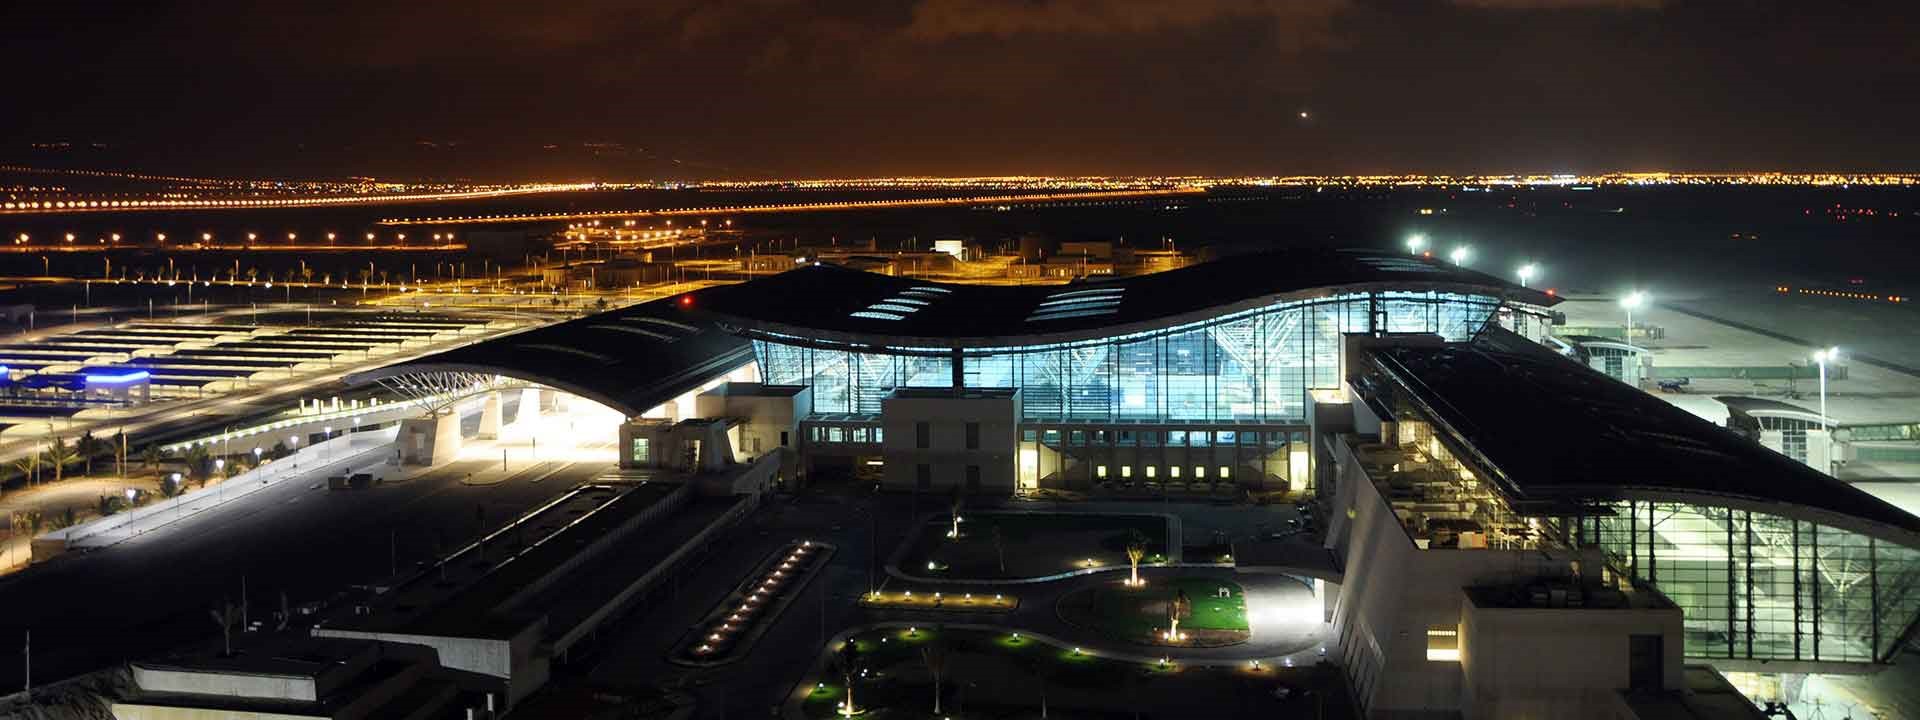 Salalah International Airport Oman- L&T Construction